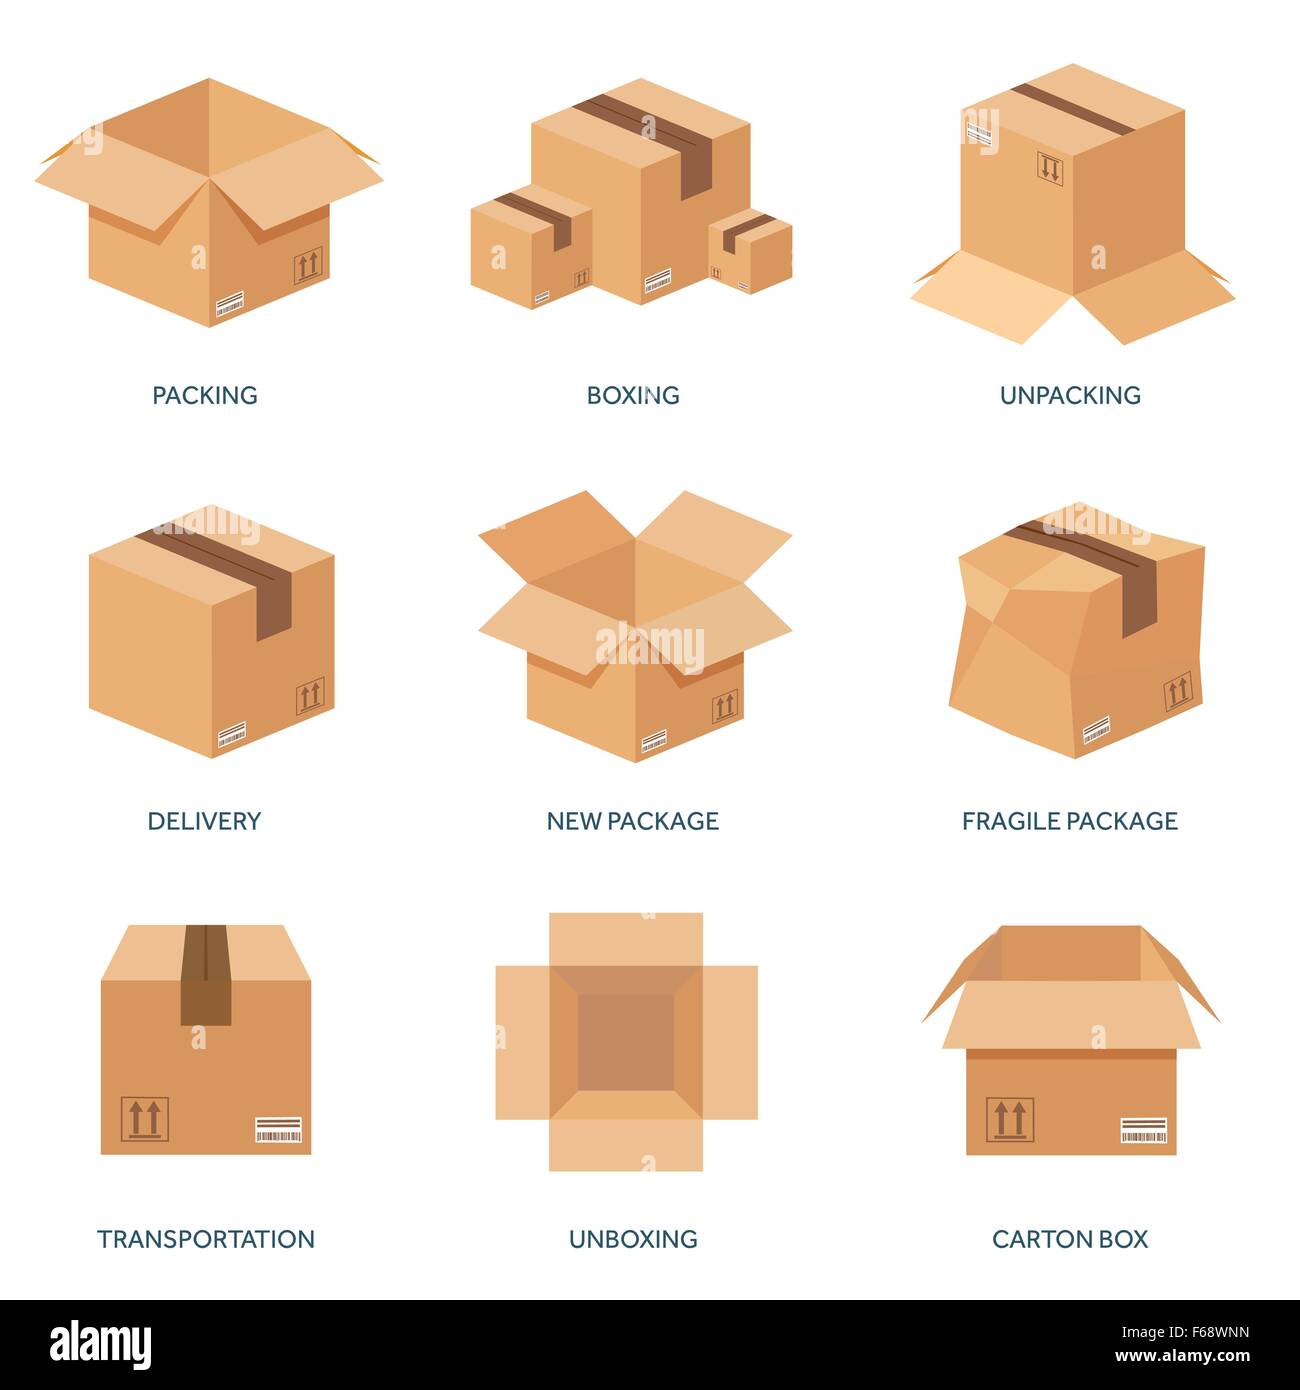 https://c8.alamy.com/comp/F68WNN/vector-illustration-flat-carton-box-transport-packaging-shipment-post-F68WNN.jpg